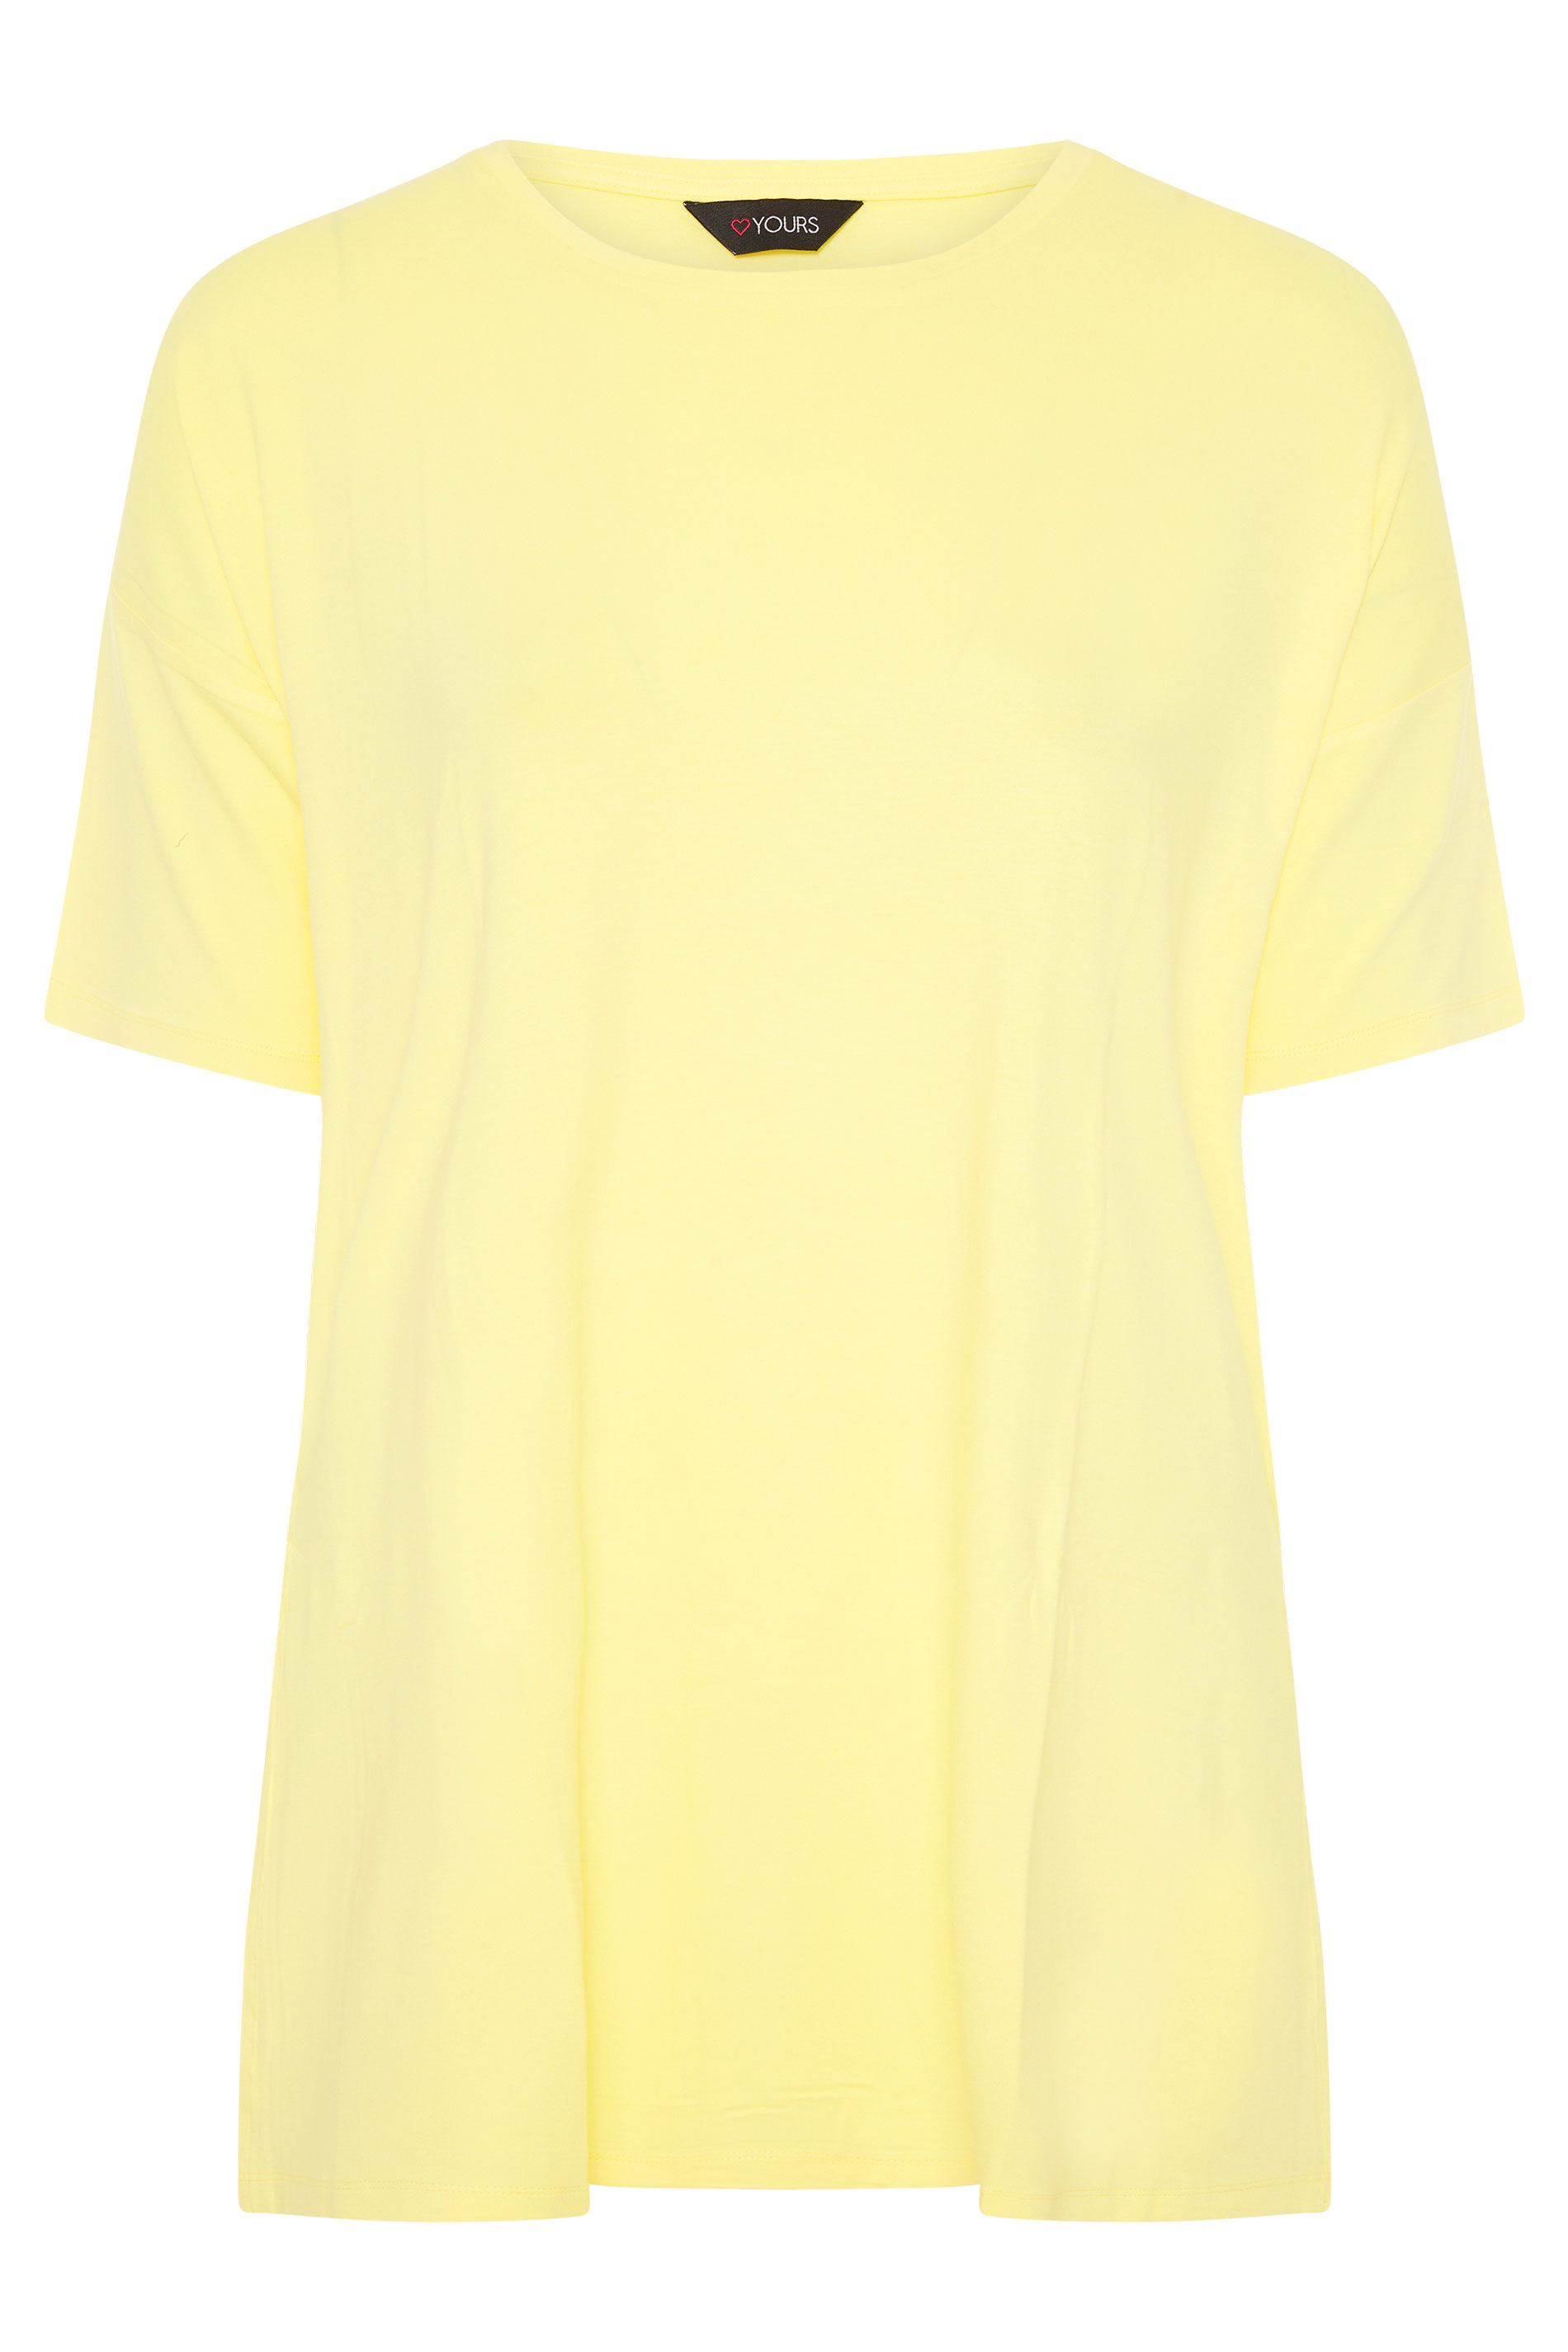 Yellow Oversized T-Shirt | Yours Clothing